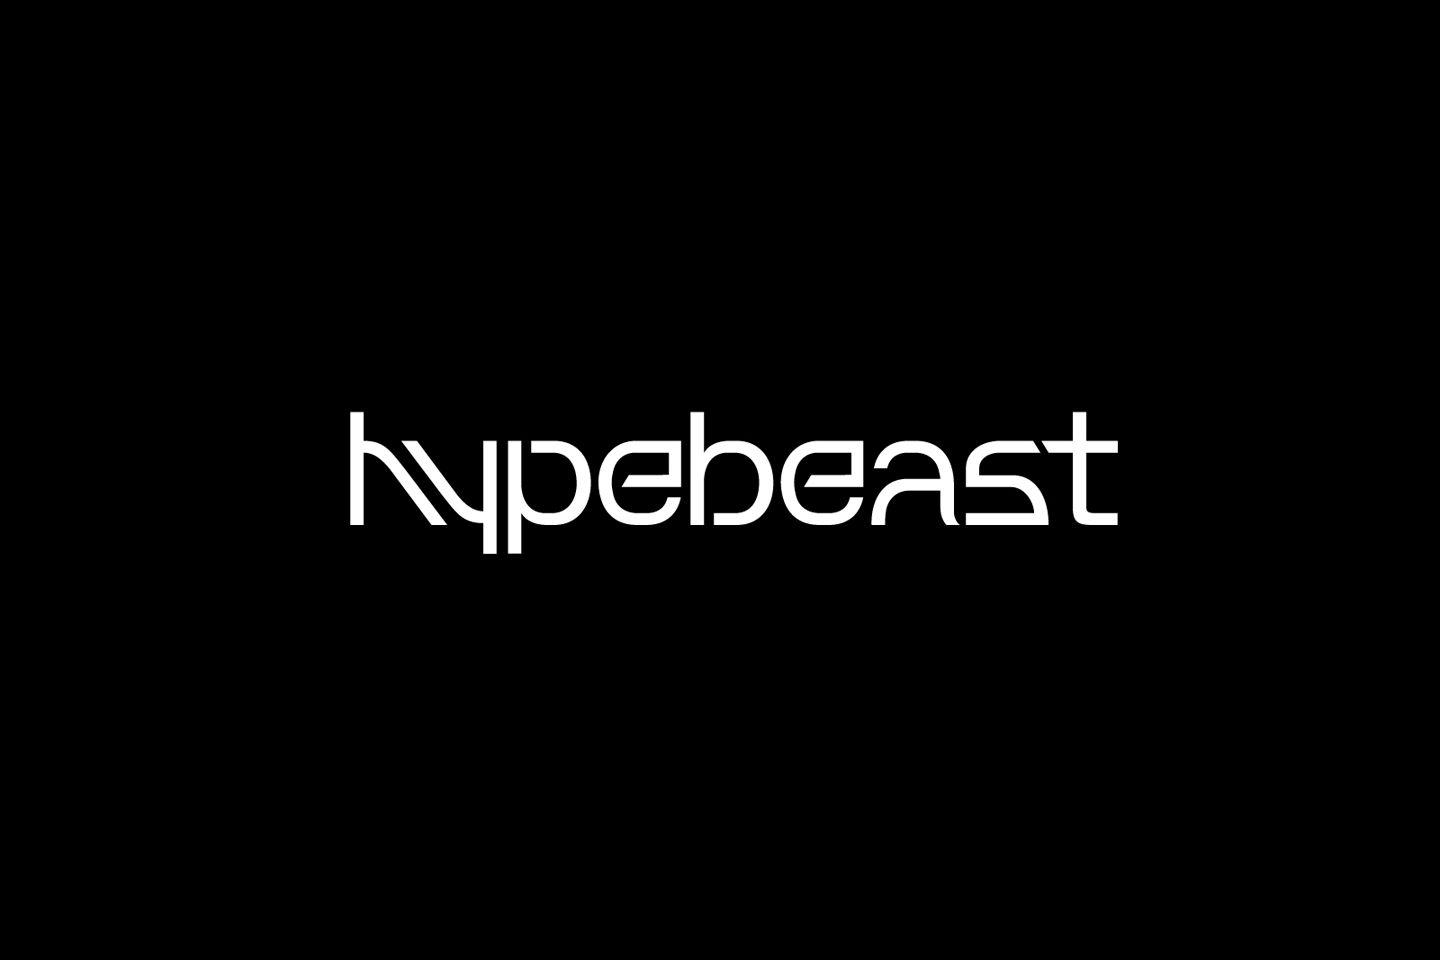 Hypebeast Brands Wallpapers - Top Free Hypebeast Brands Backgrounds ...